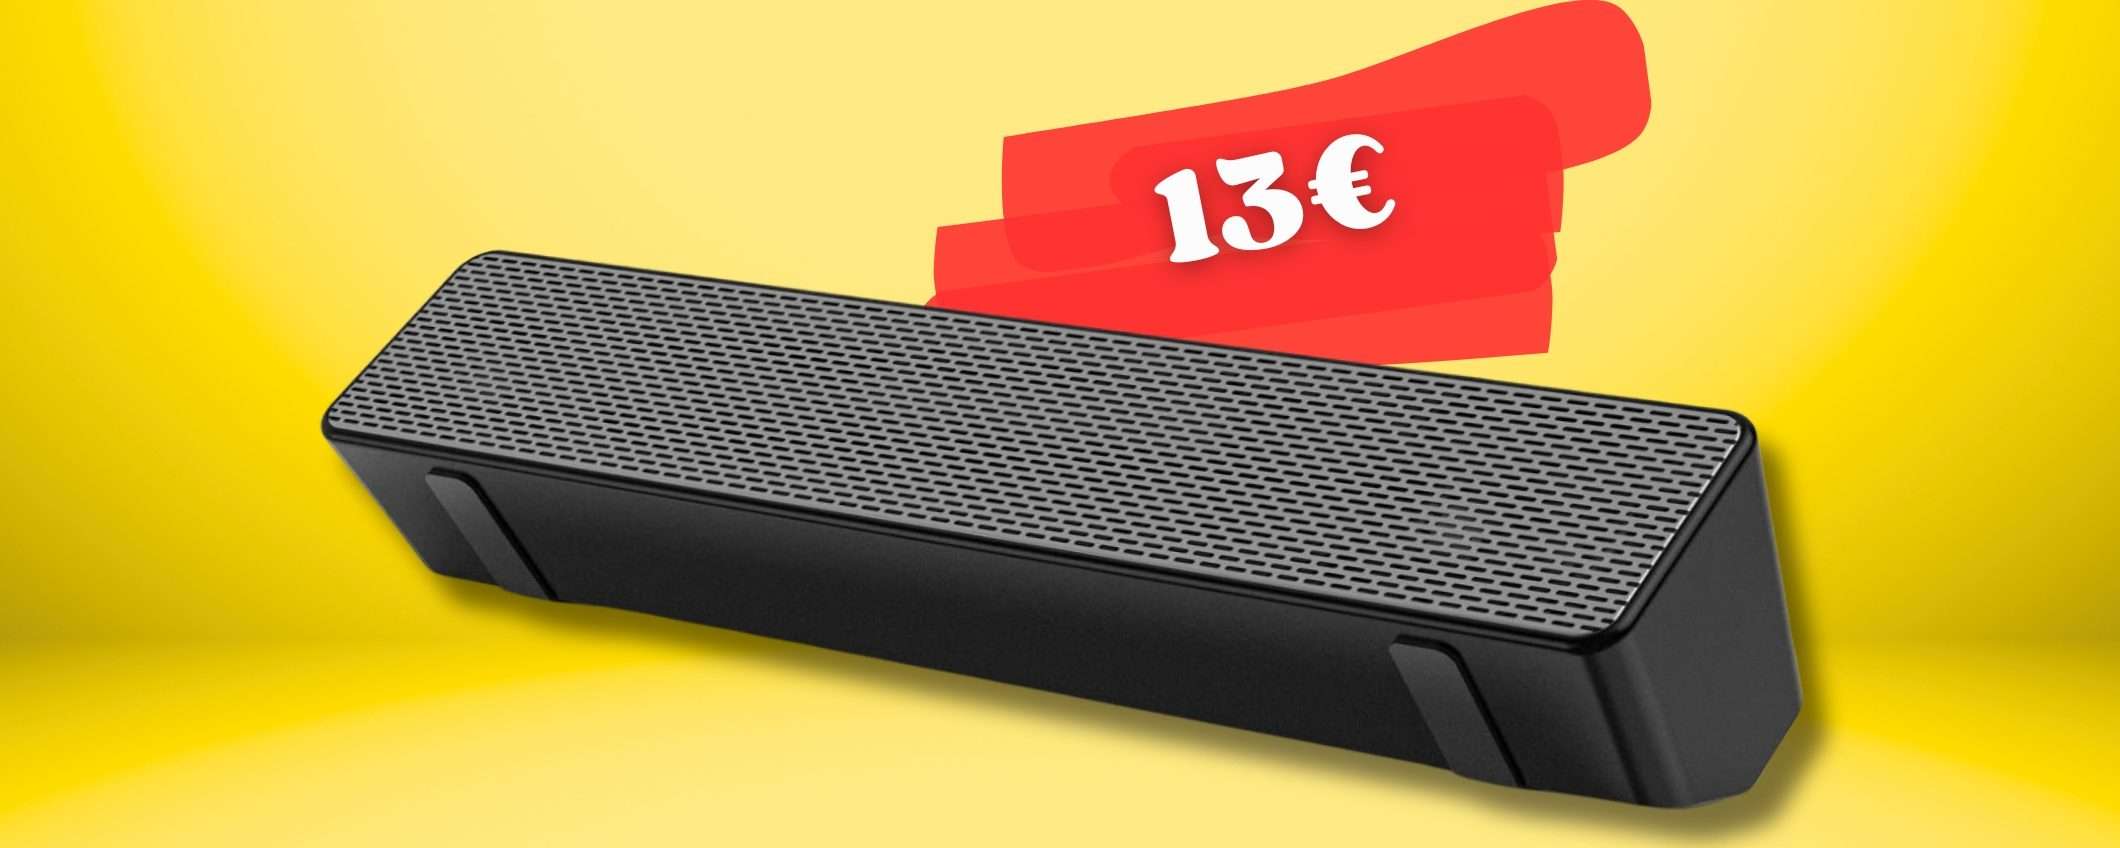 Soundbar ma anche Speaker Bluetooth PORTATILE: audio potente (13€)